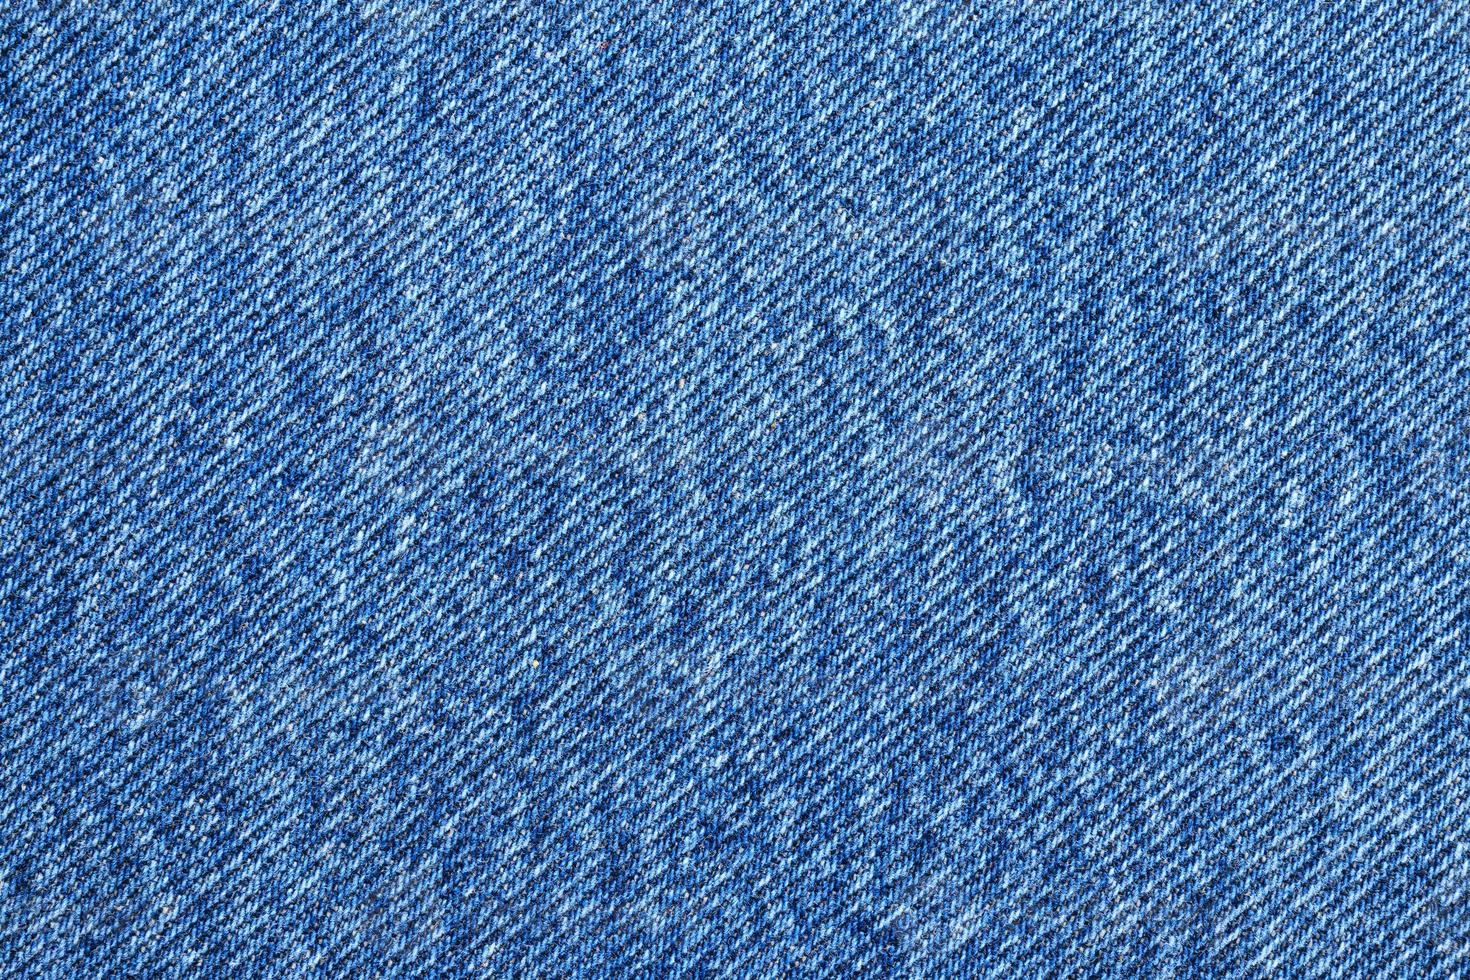 Denim blue jeans texture close up background top view photo